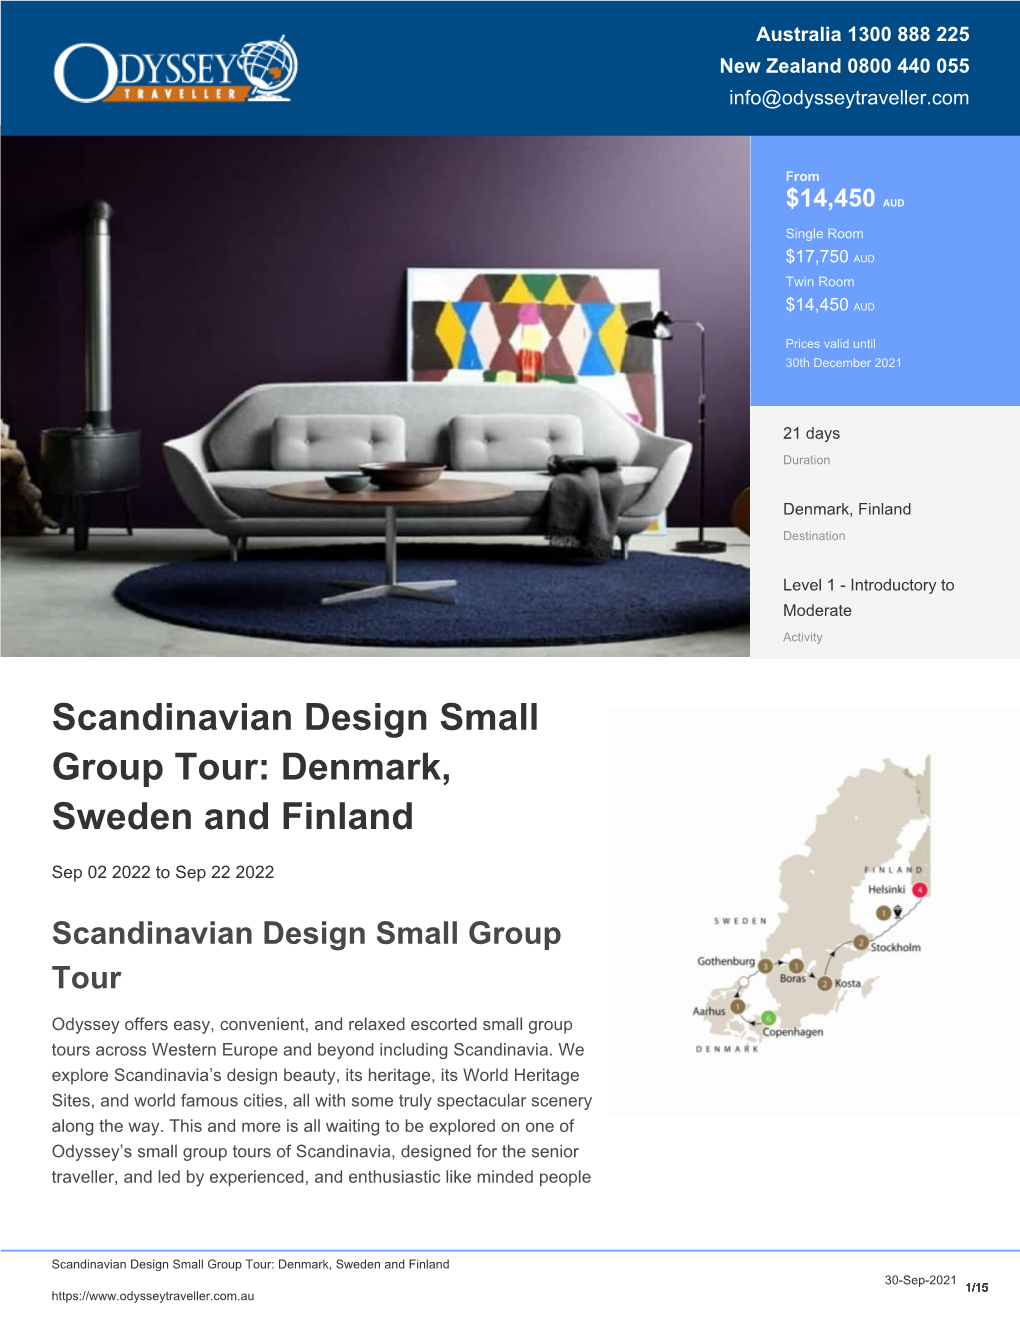 Scandinavian Design | Small Group Tours of Denmark, Sweden